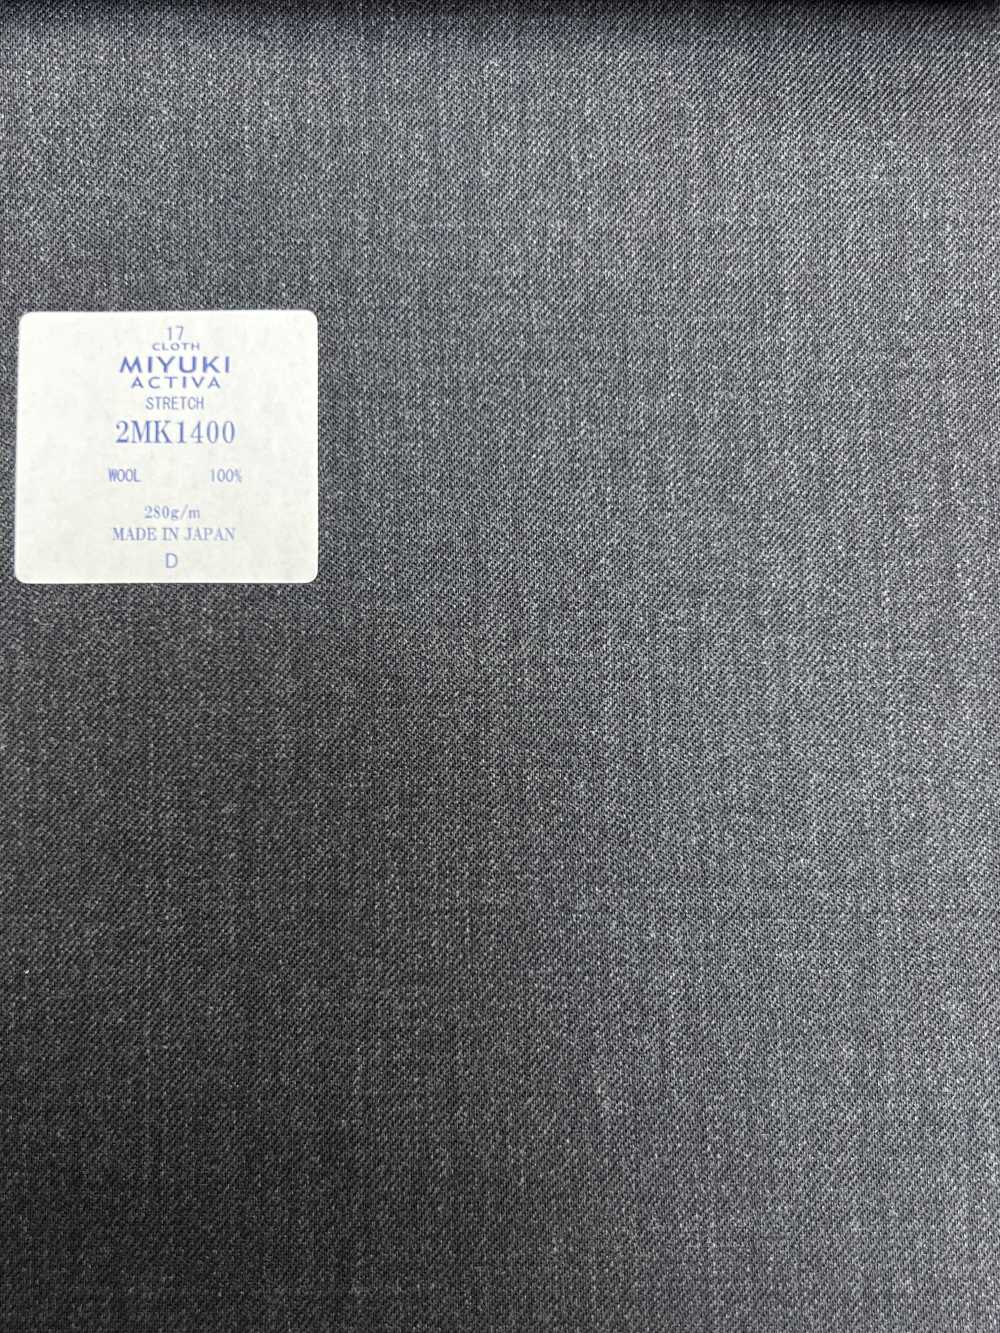 2MK1400 MIYUKI COMFORT ACTIVA STRETCH Charcoal Gray[Textile] Miyuki Keori (Miyuki)